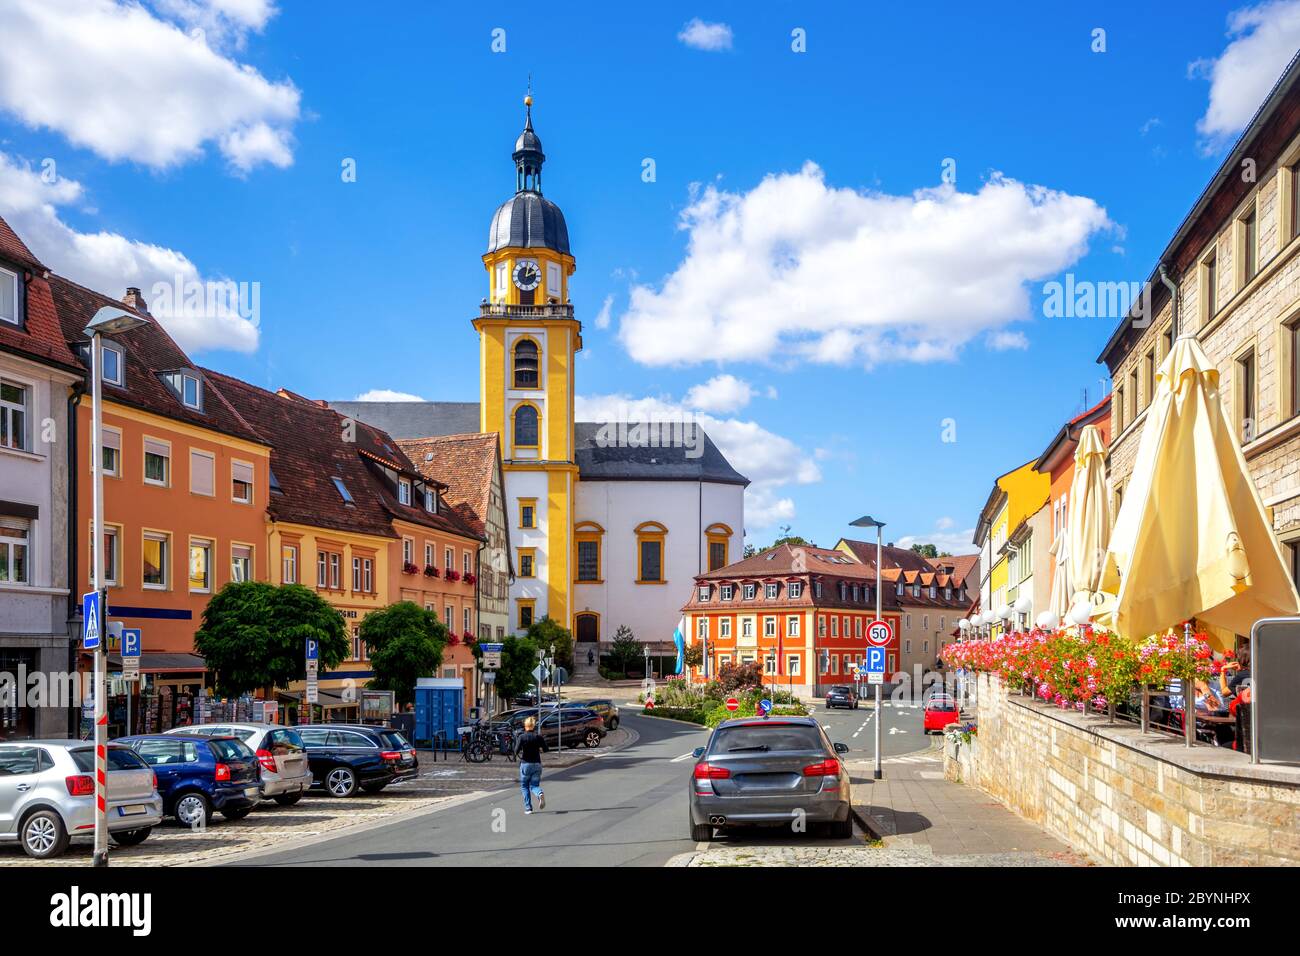 Historical city of Kitzingen, Germany Stock Photo